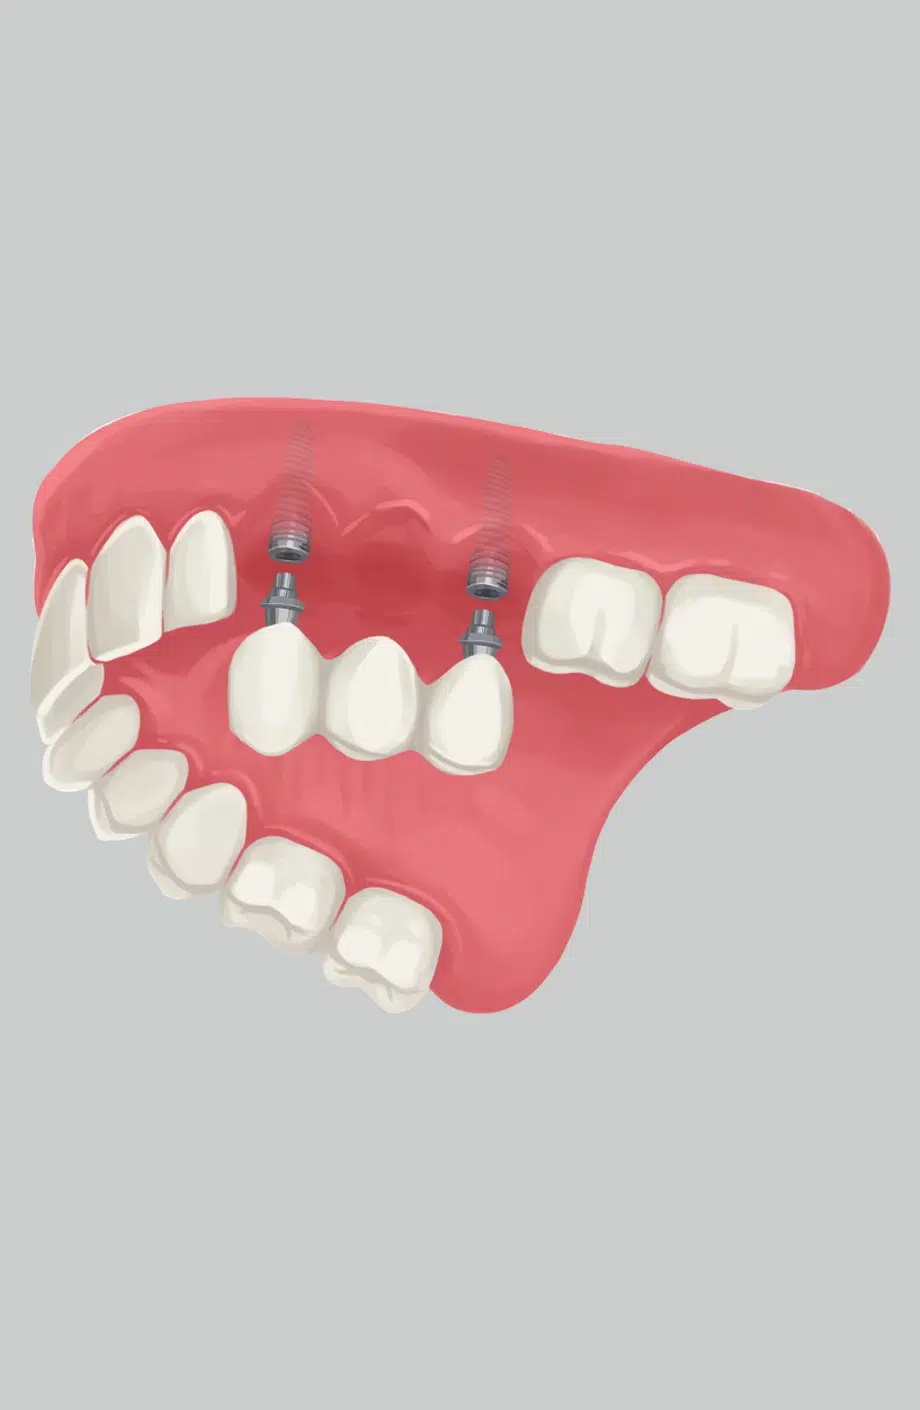 dental implants in brentwood -  hallmark dental brentwood